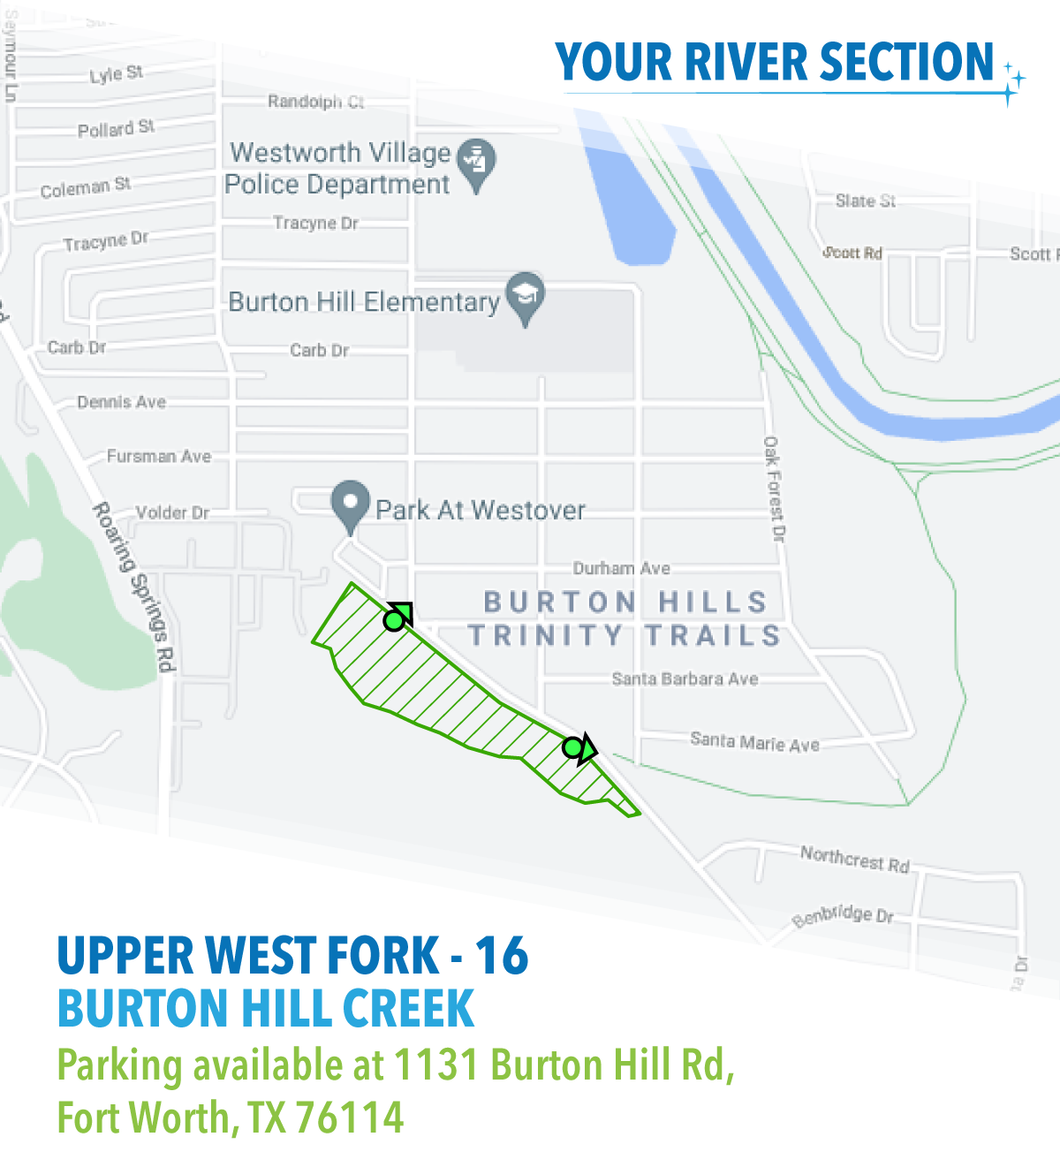 Section 16 – Burton Hill Creek